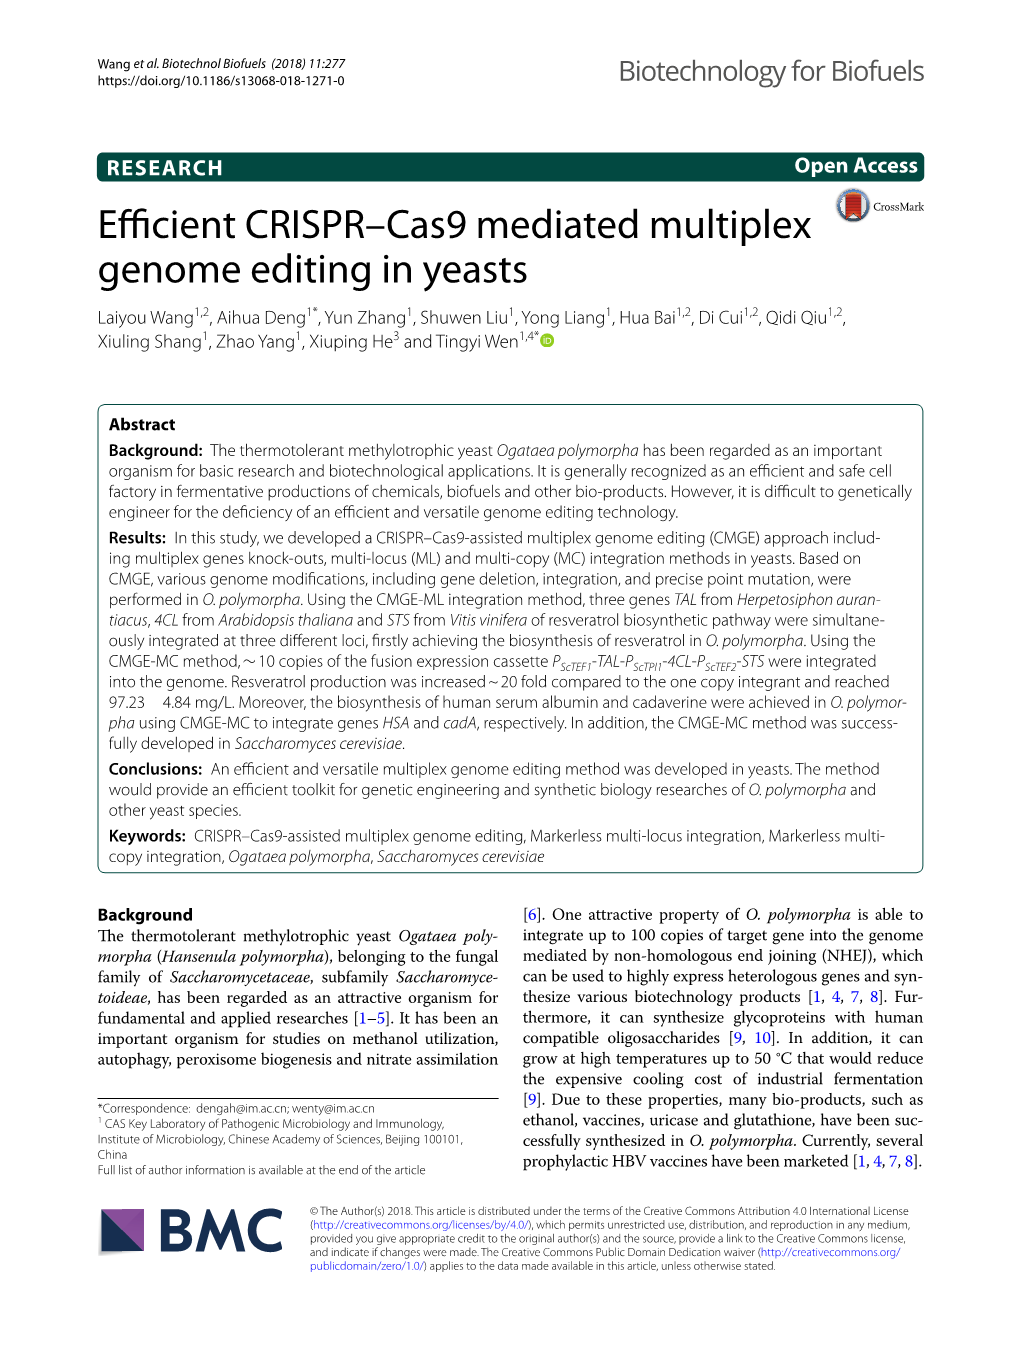 Efficient CRISPR–Cas9 Mediated Multiplex Genome Editing in Yeasts